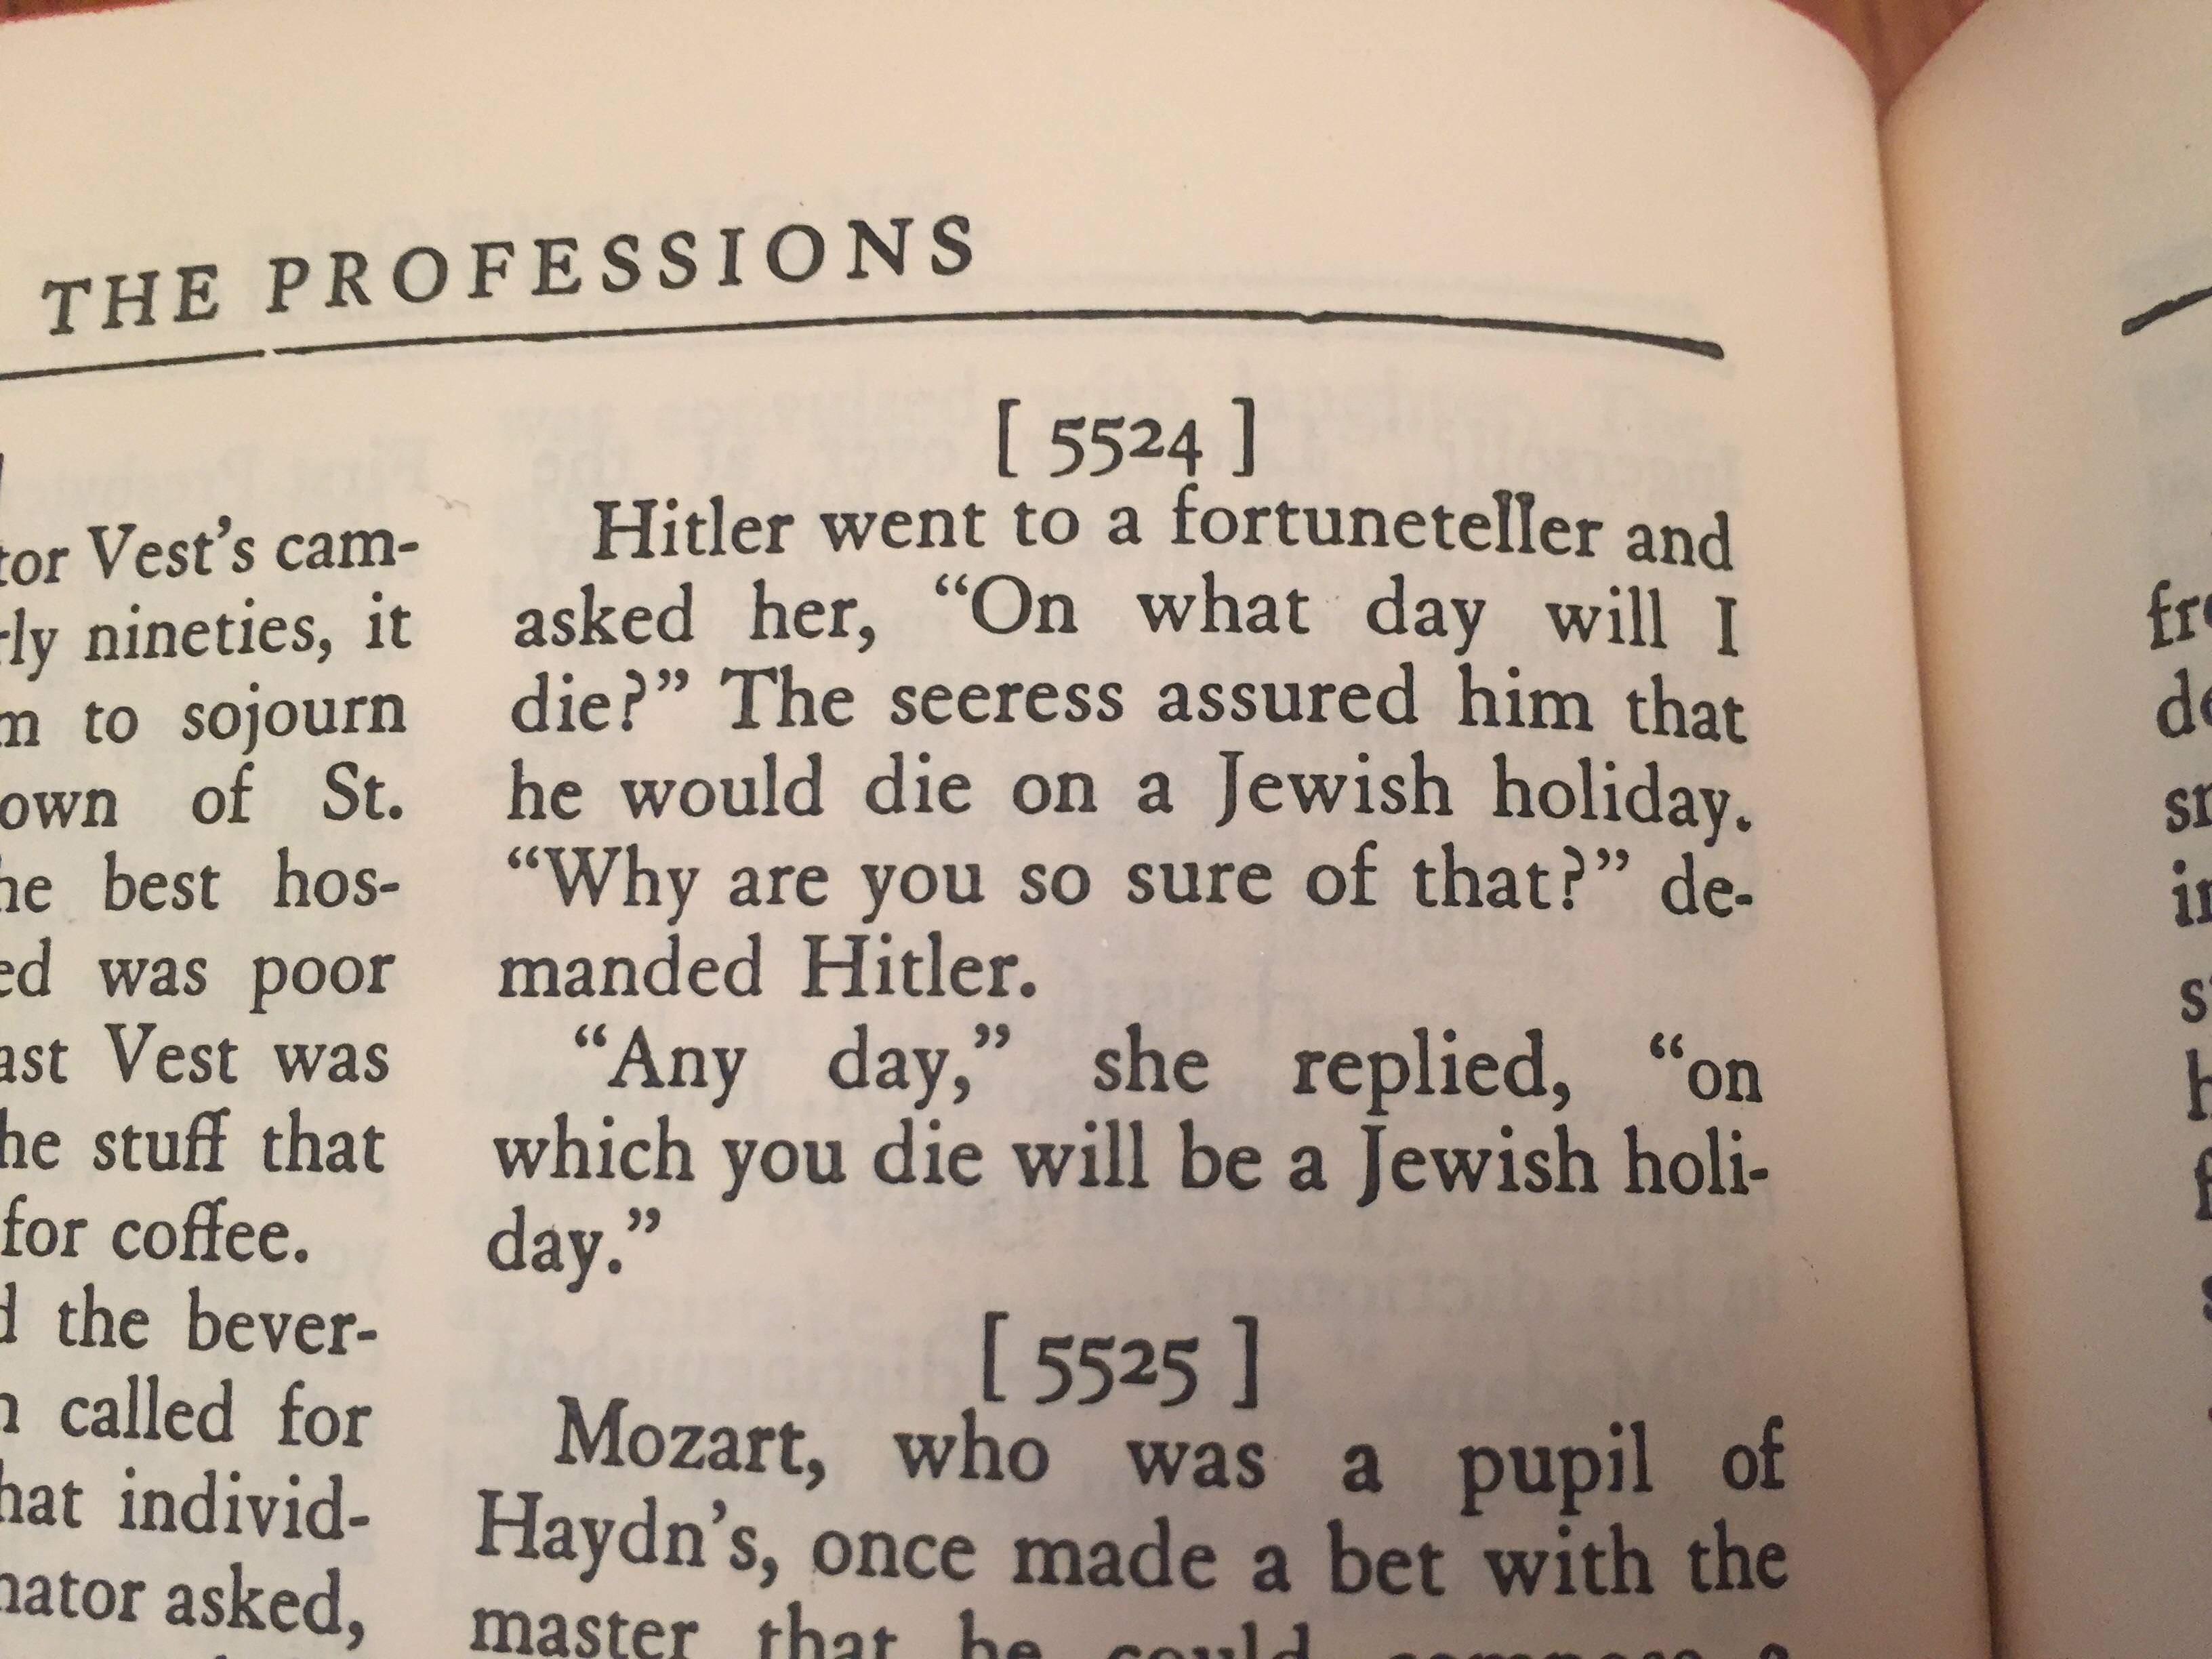 A joke book from 1940